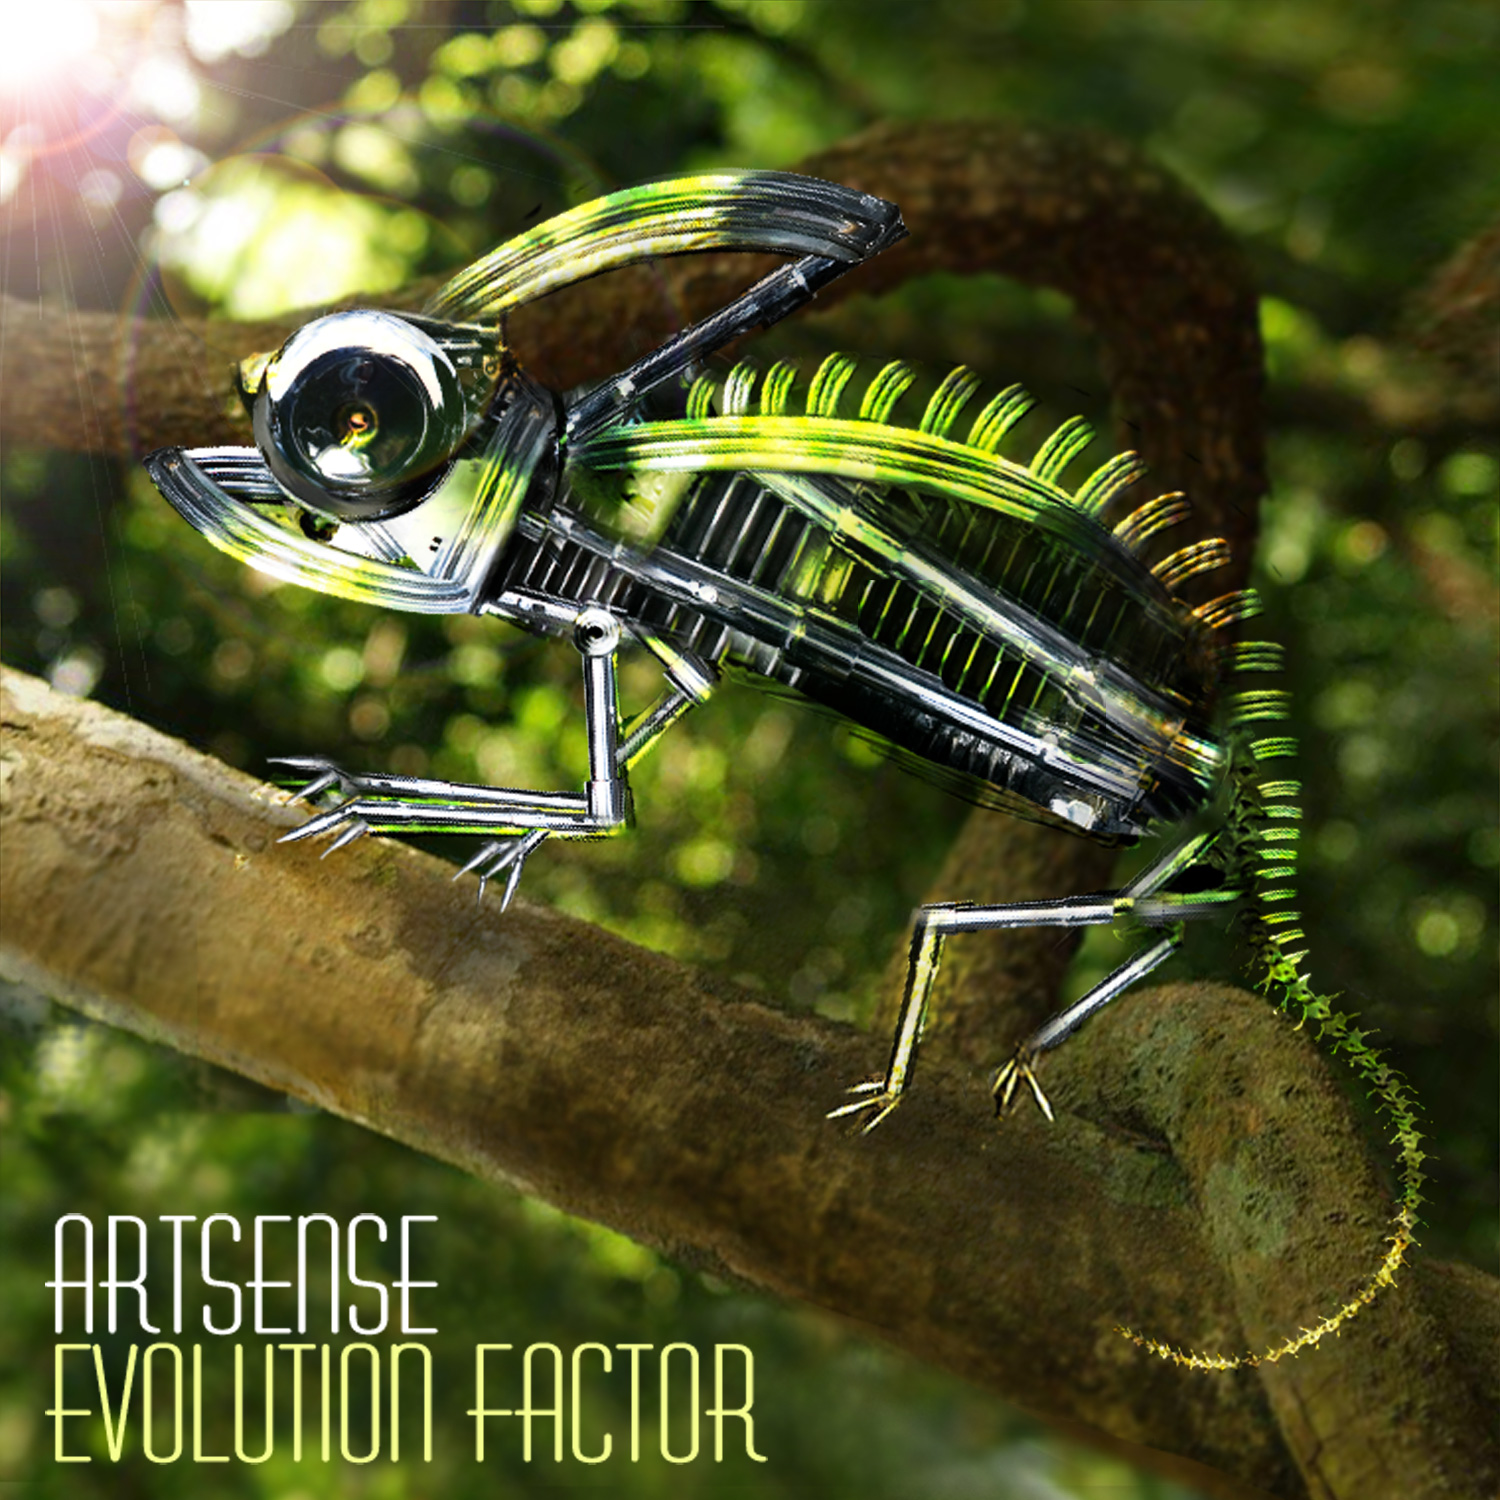 geoep016-Artsense-Evolution_Factor_EP.jpg